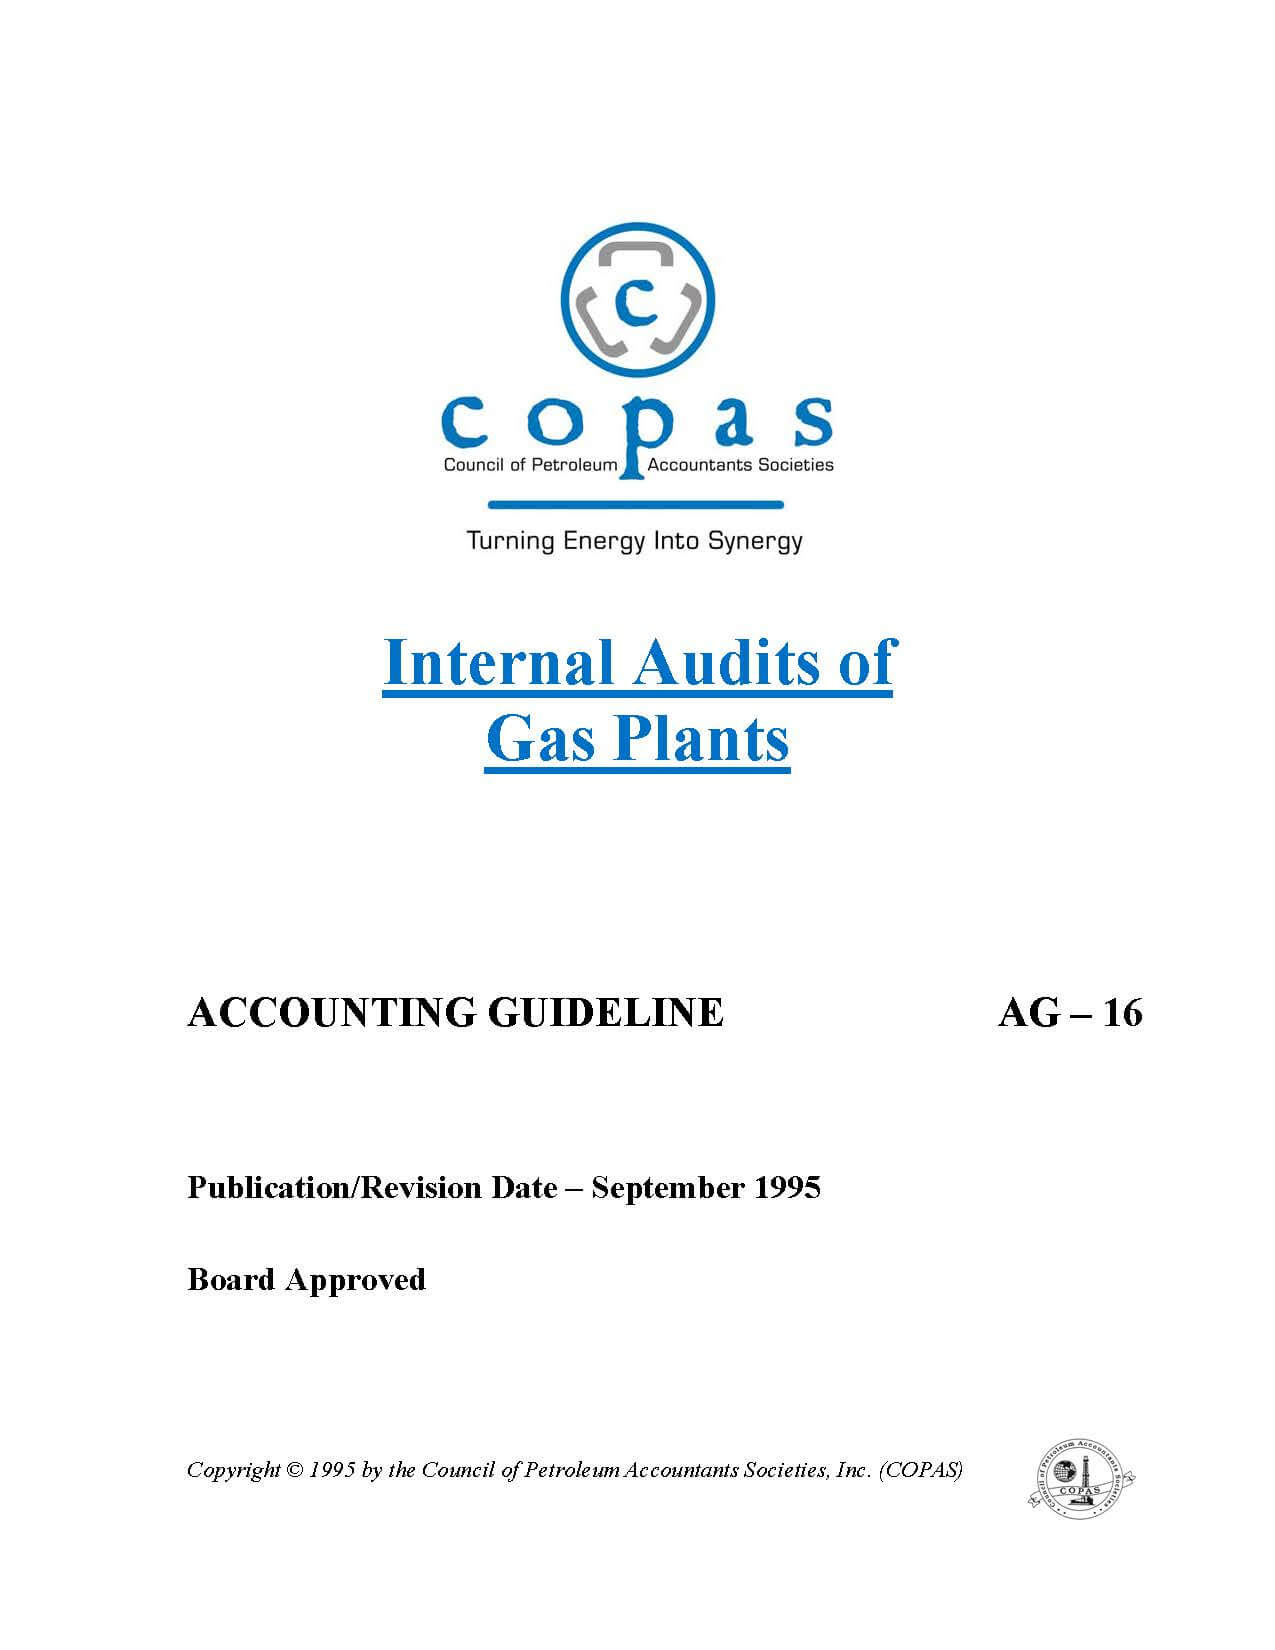 AG-16 Internal Audits of Gas Plants